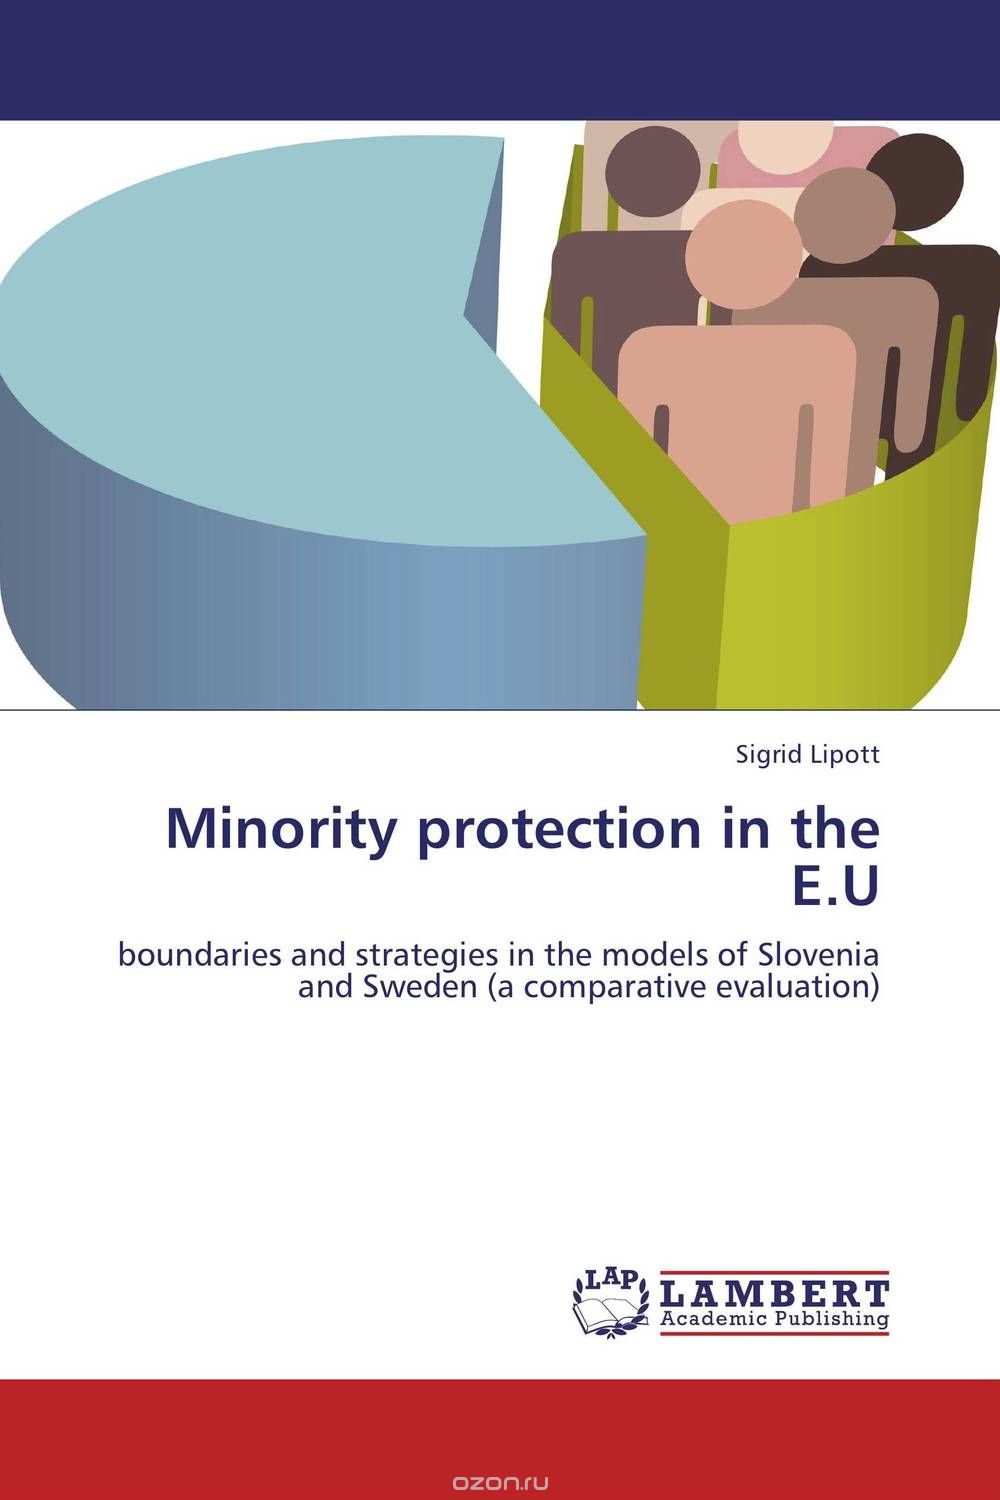 Скачать книгу "Minority protection in the E.U"